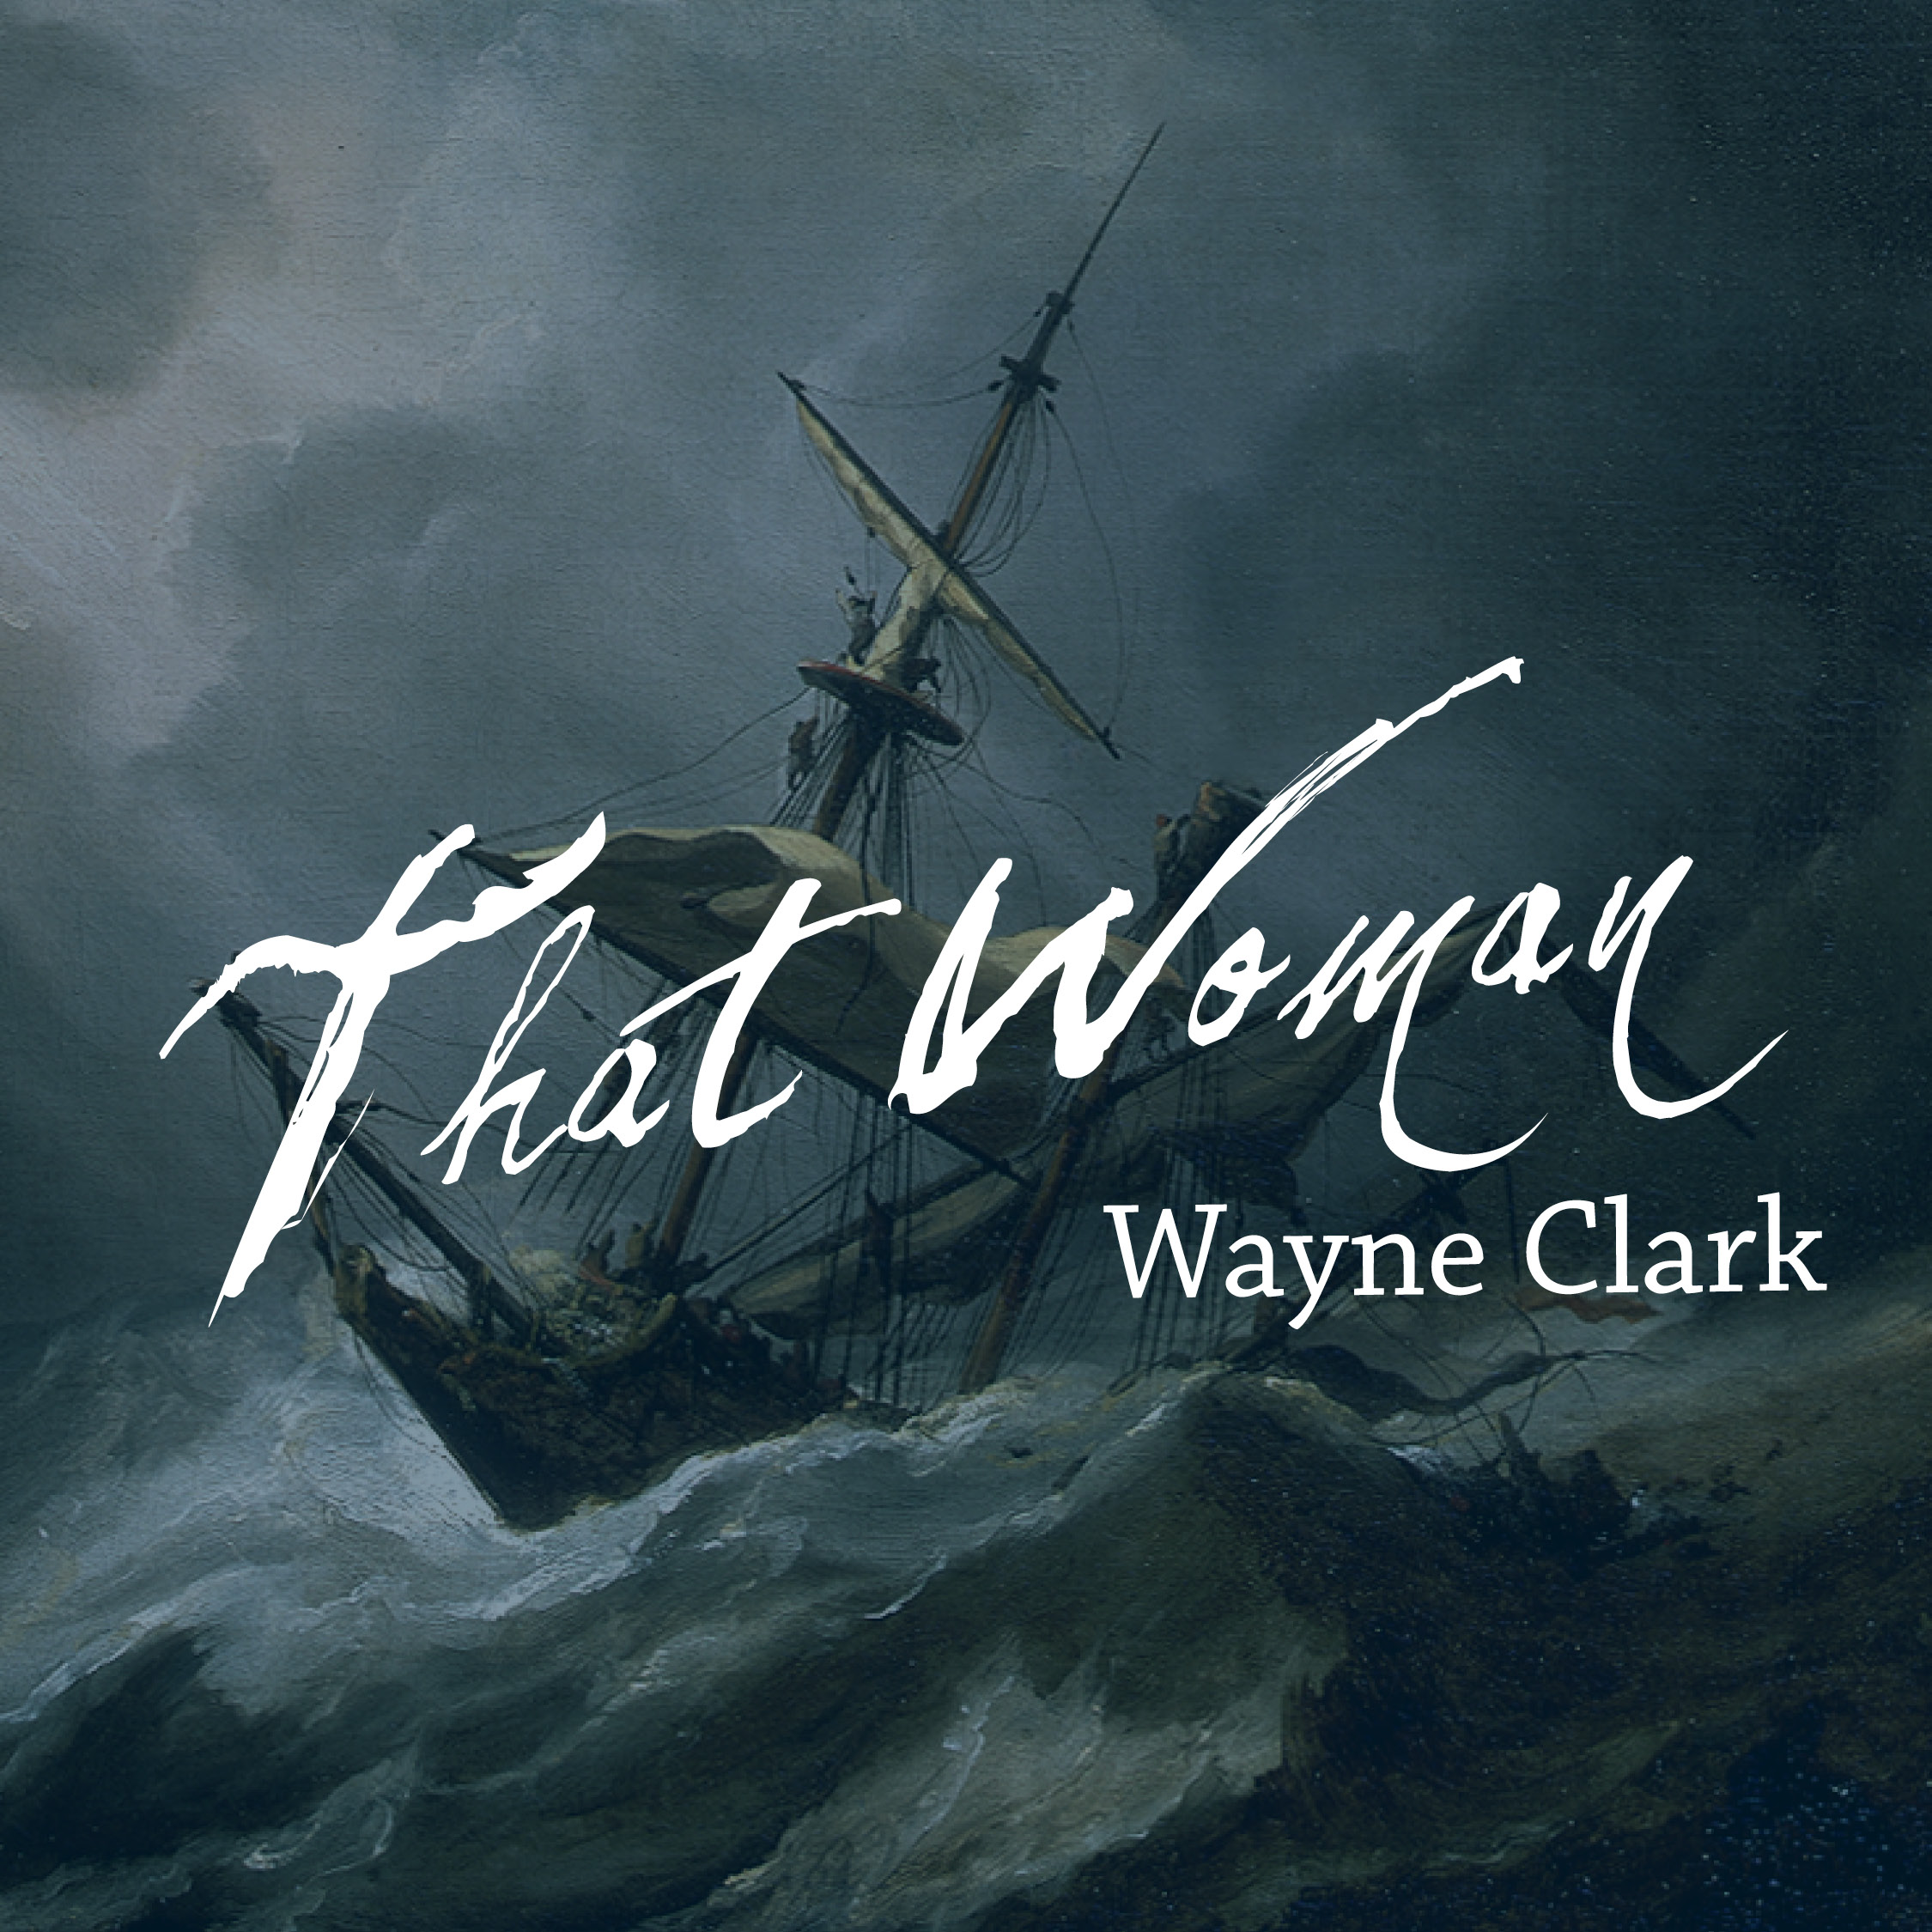 International Award Winning Author Wayne Clark Announces Release Of New Historical Fiction Novel, ‘That Woman’